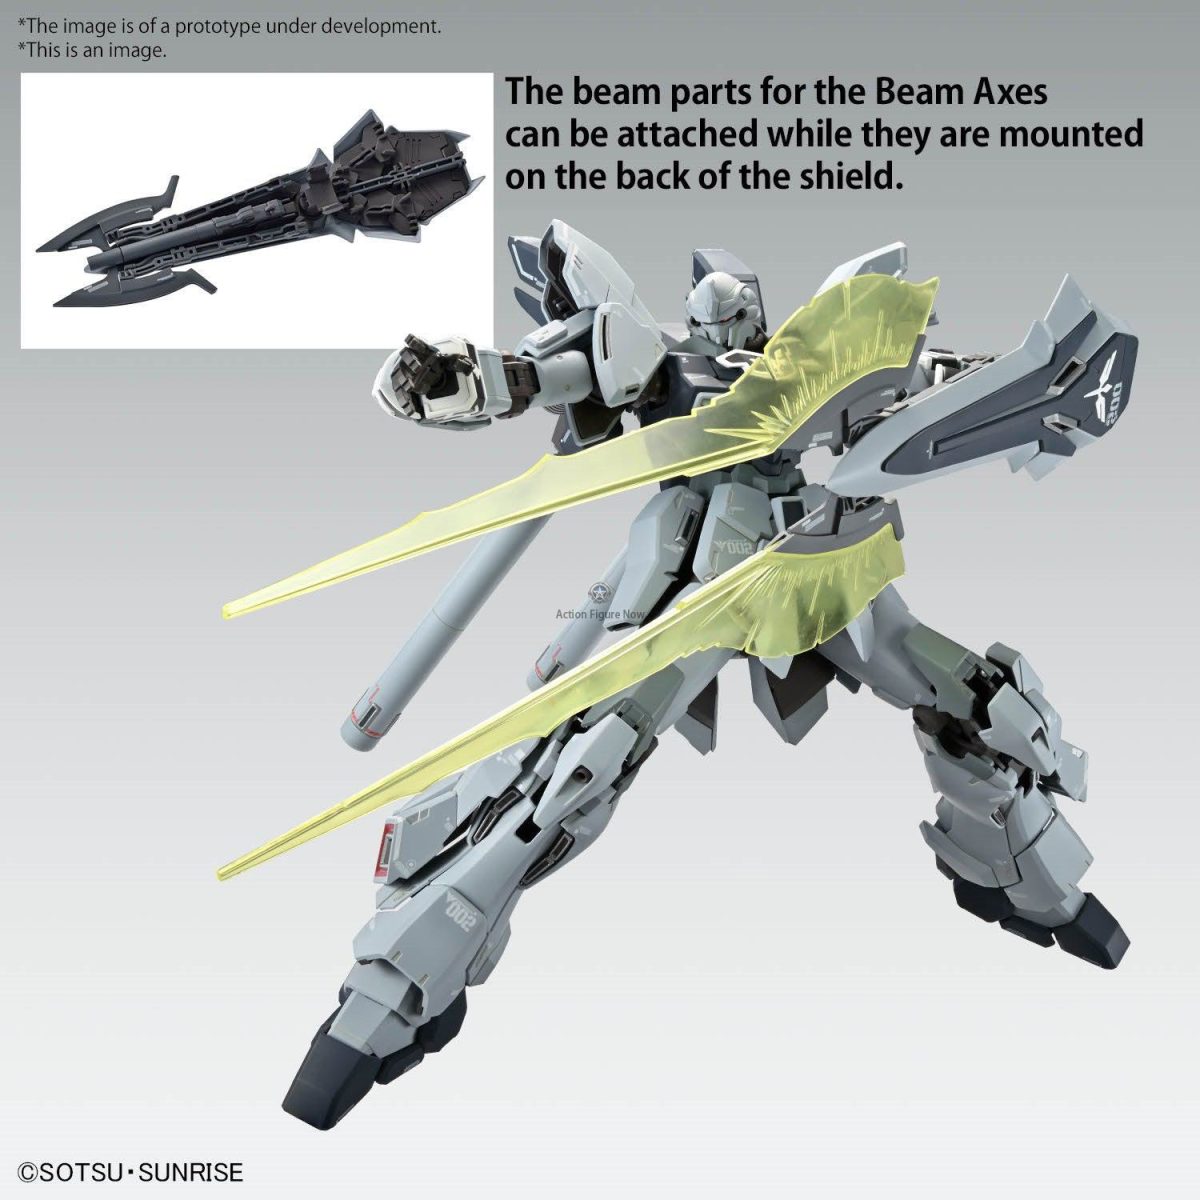 MG 1/100 Sinanju Stein Narrative Ver. Ka Gundam Plastic Model Kit